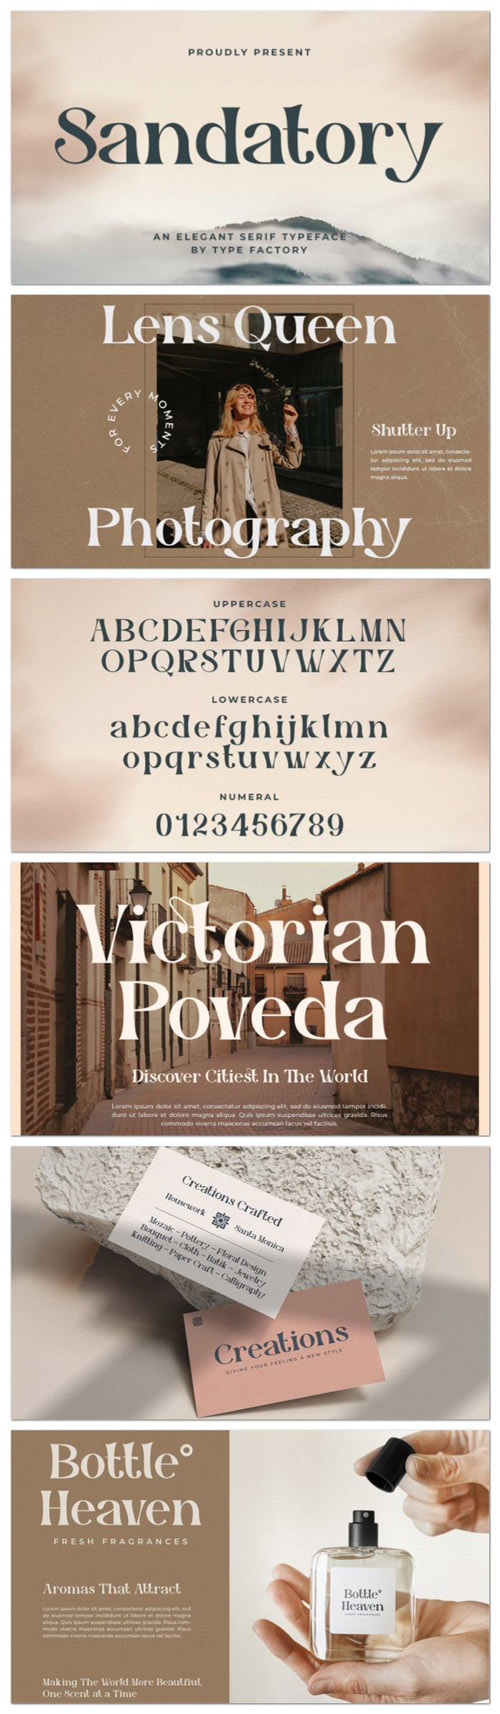 Sandatory - Elegant Serif Typeface